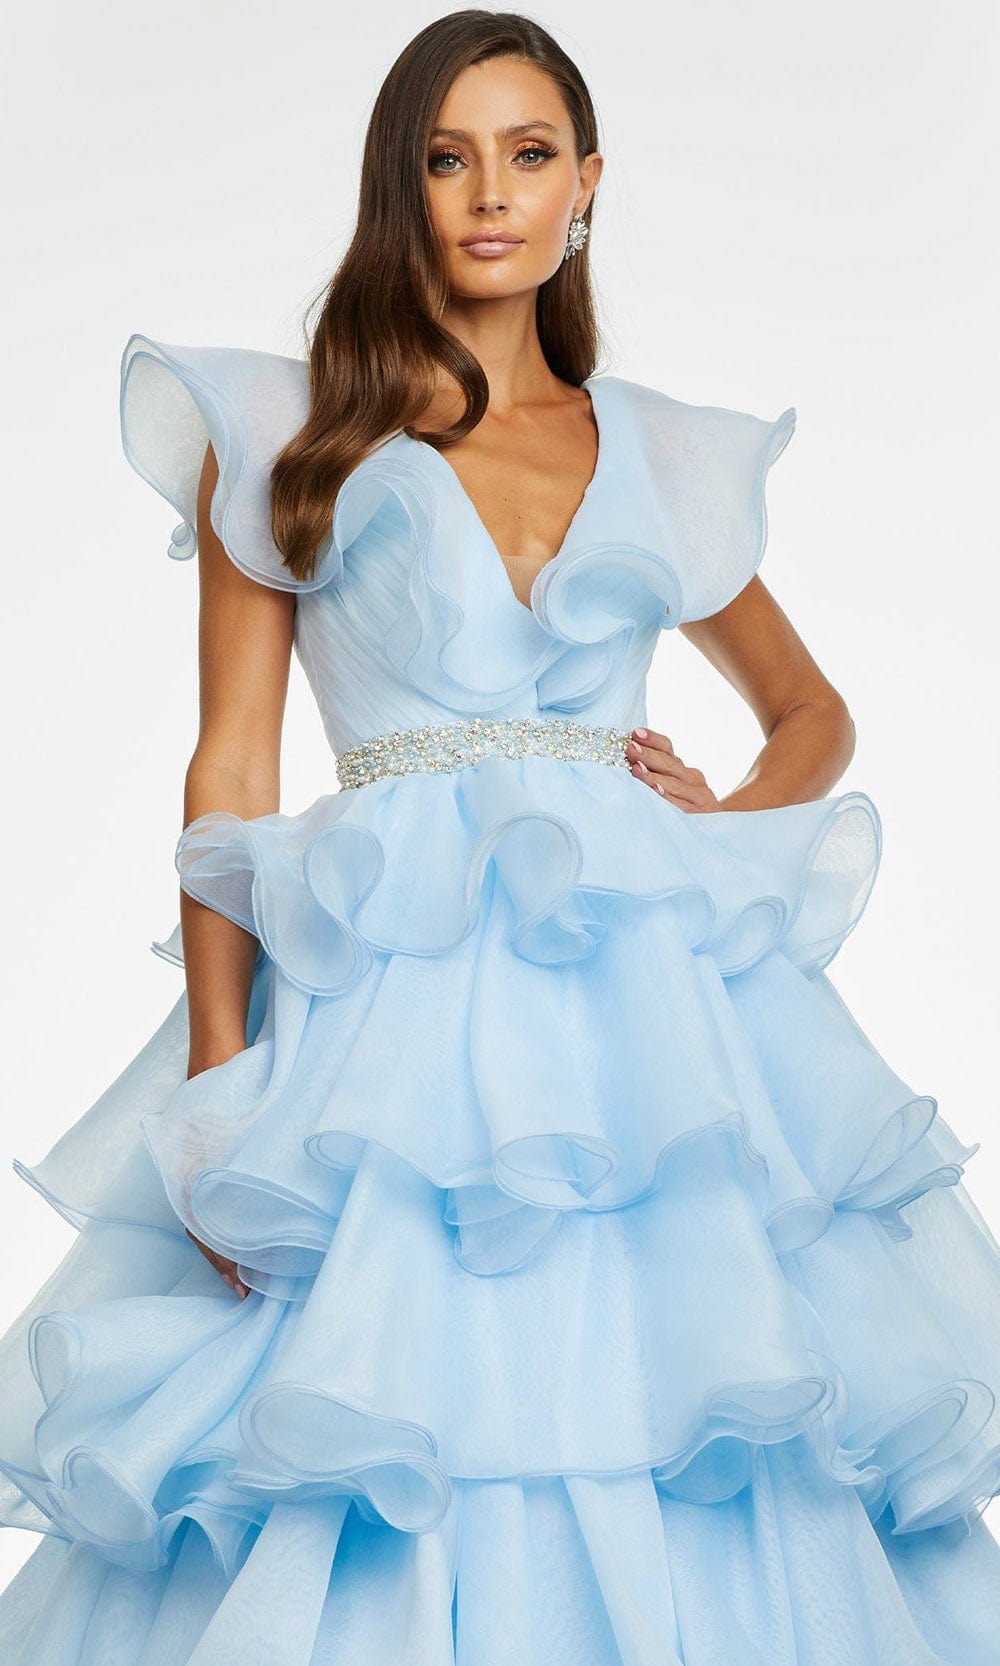 Ashley Lauren - 11154 Ruffle Ornate Ballgown Prom Dresses